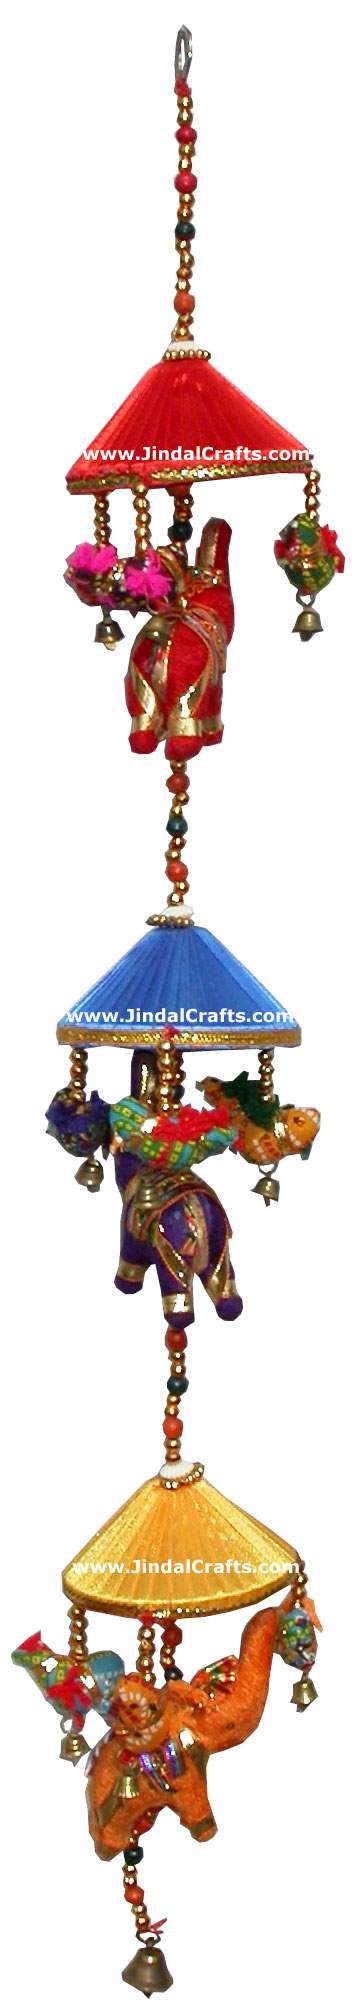 Elephants Hanging Home Decoration India Handicraft Arts